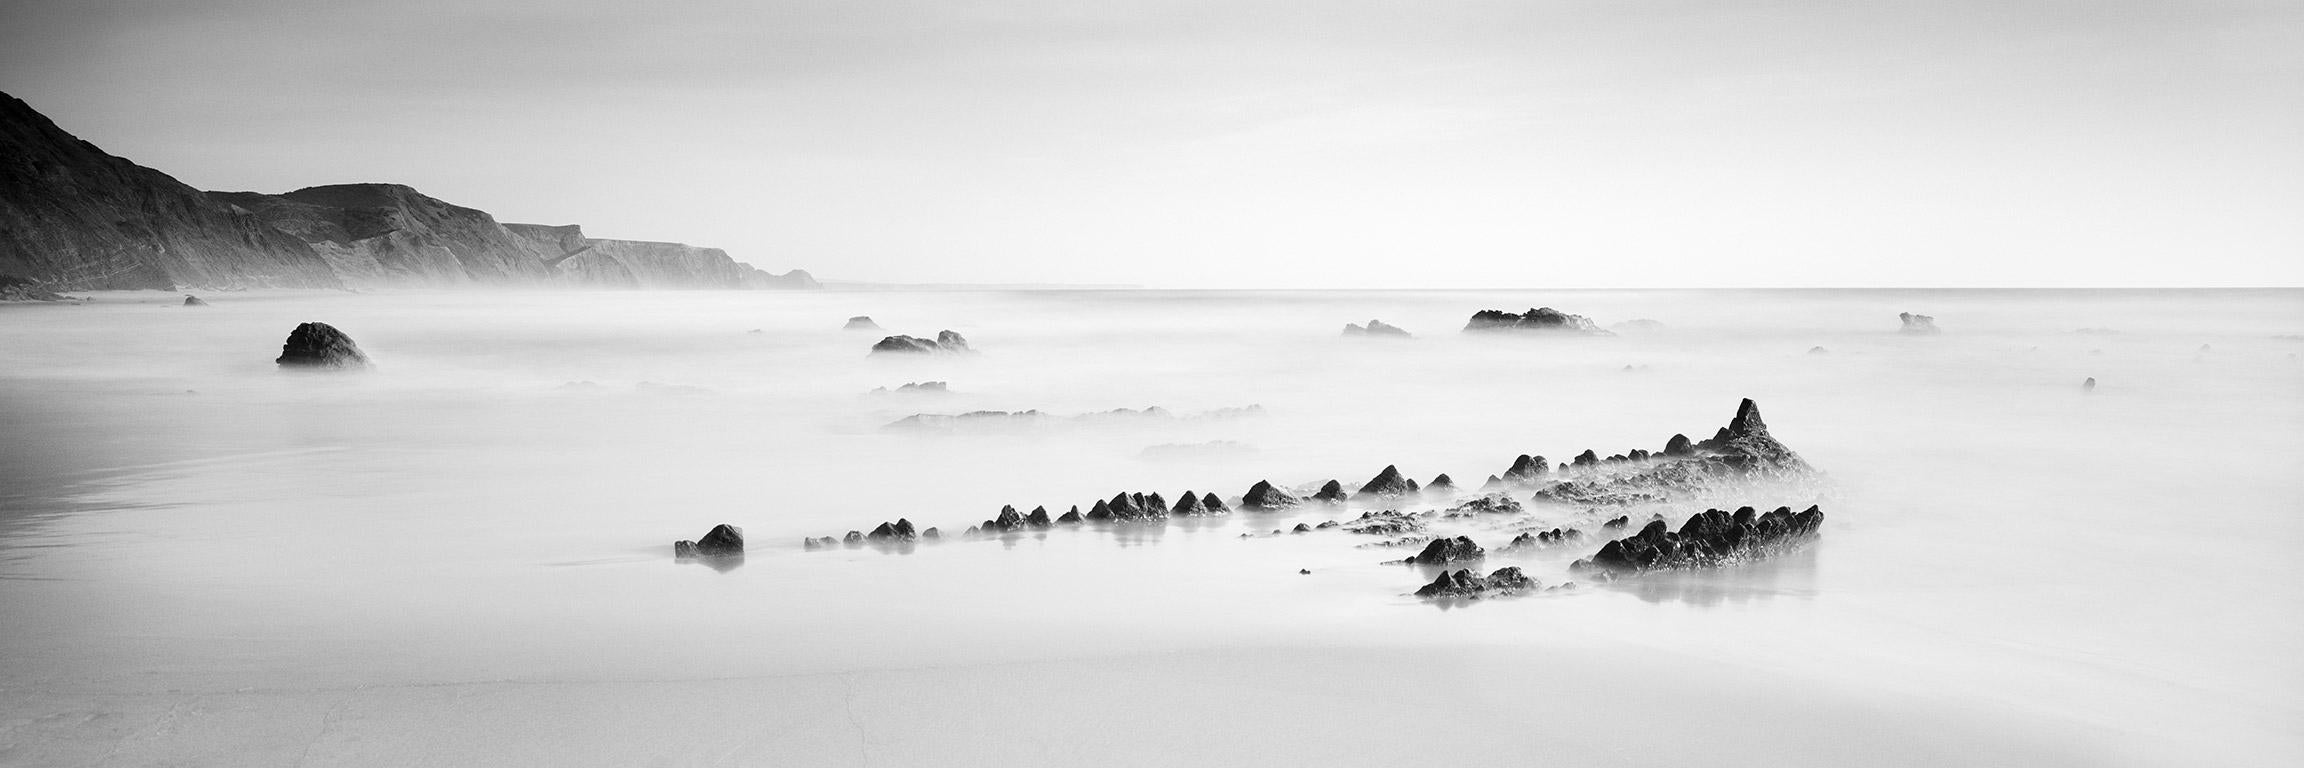 Fishbones Panorama, Beach, Shoreline, Portugal, black and white landscape print